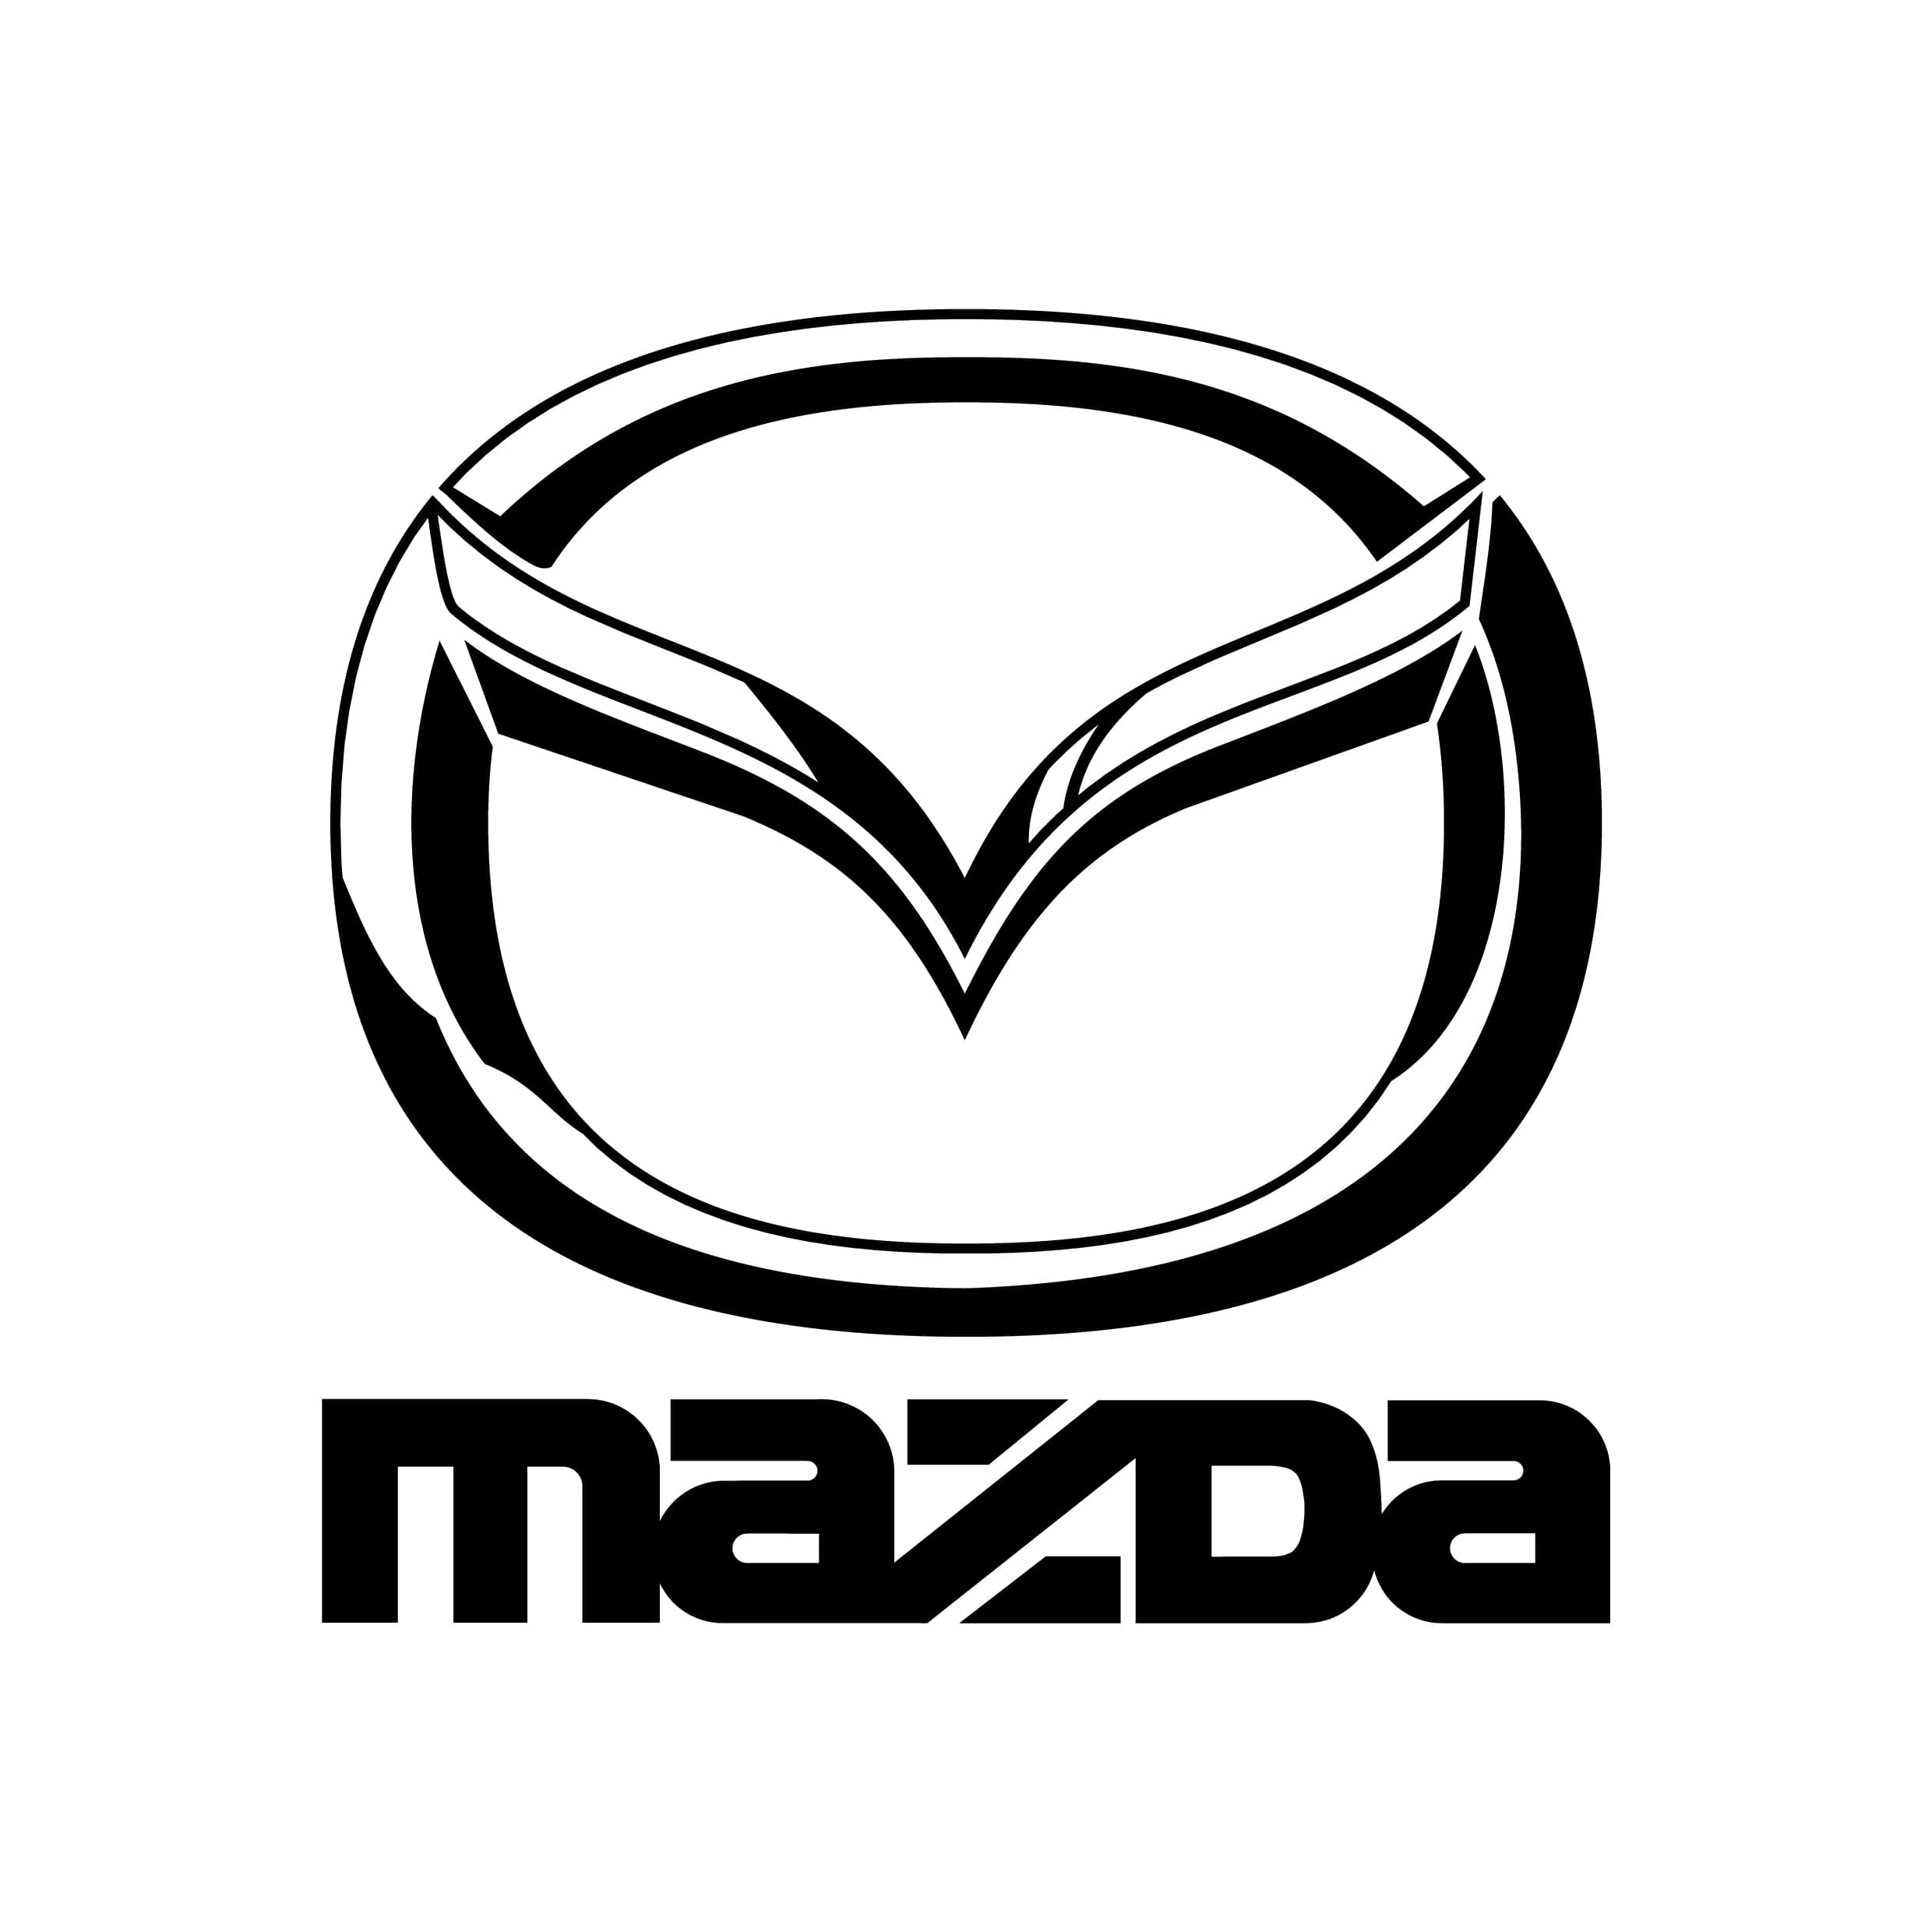 stickers-mazda-ref2-autocollant-voiture-sticker-auto-autocollants-decals-sponsors-racing-tuning-sport-logo-min